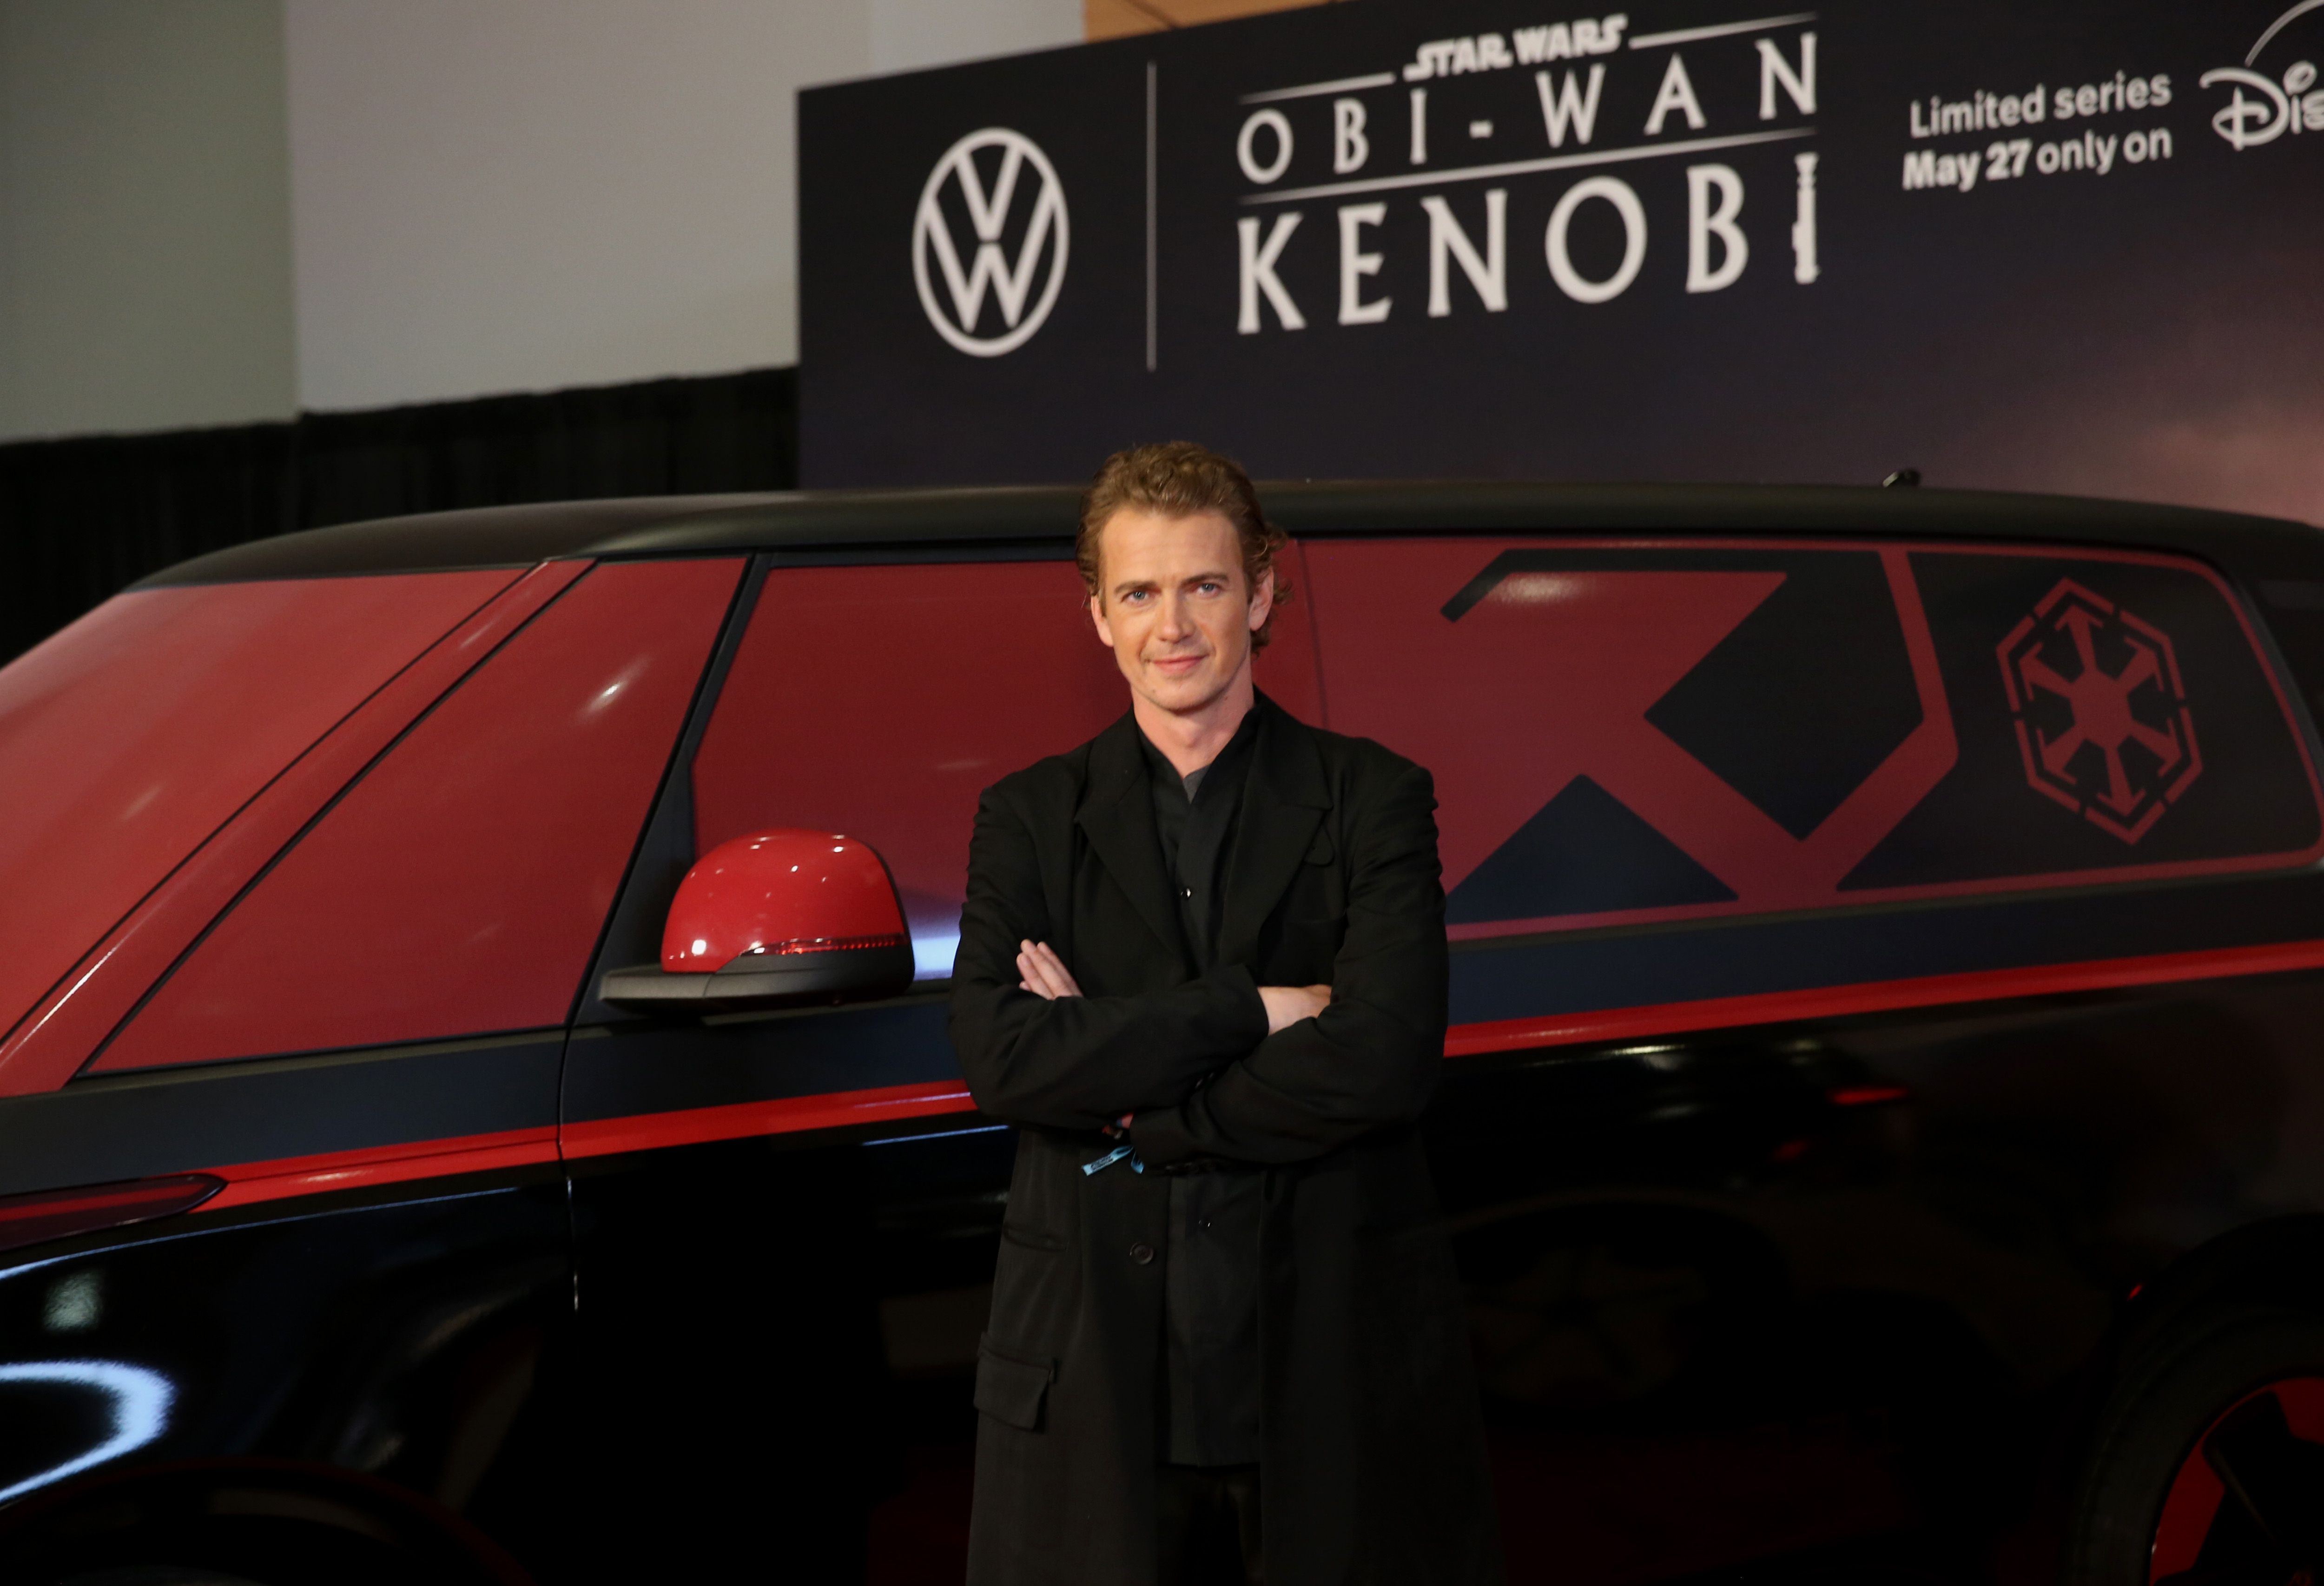 Darth Vader actor Hayden Christensen attends the premiere of the first two episodes of Obi-Wan Kenobi at Star Wars celebration